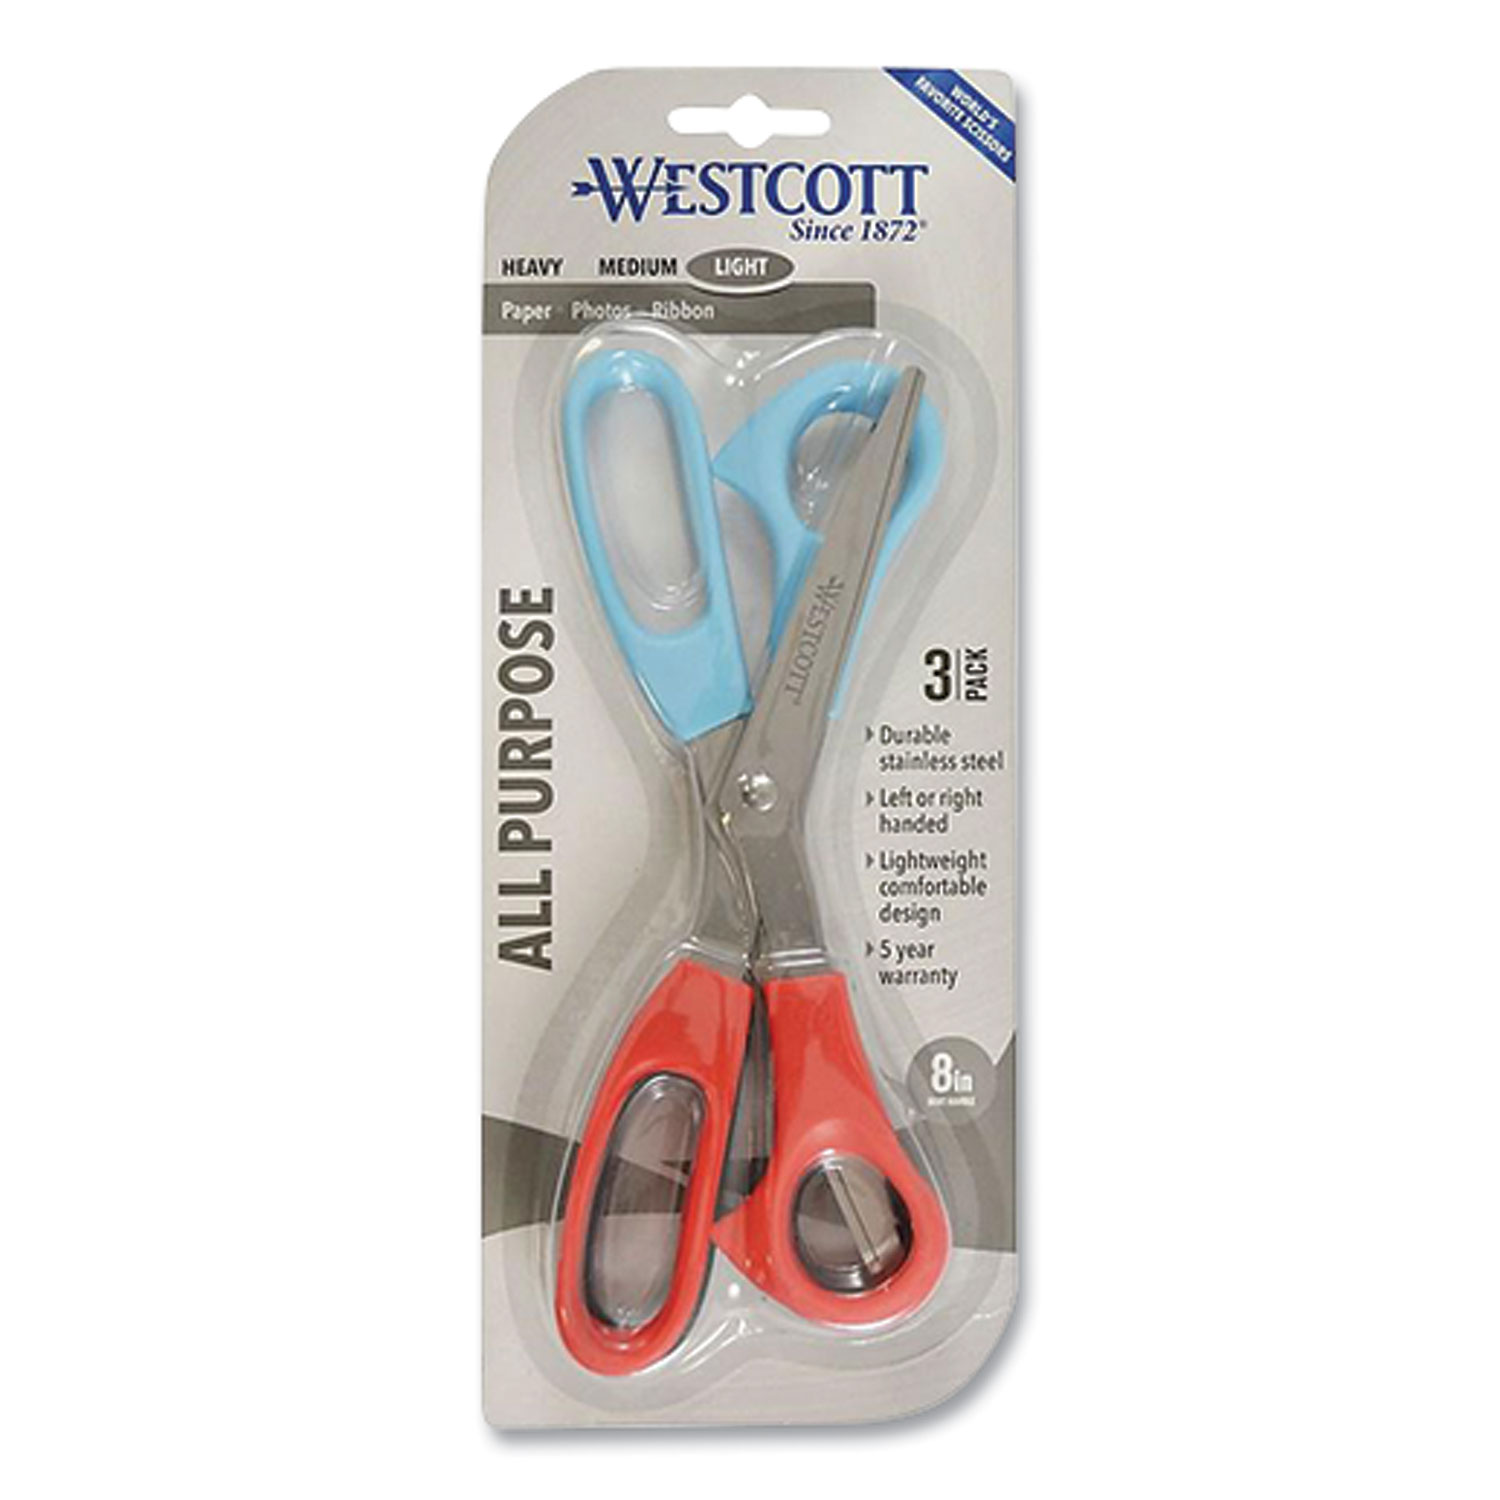 Westcott All-Purpose Value Stainless Steel Scissors, 8, Bent, Red